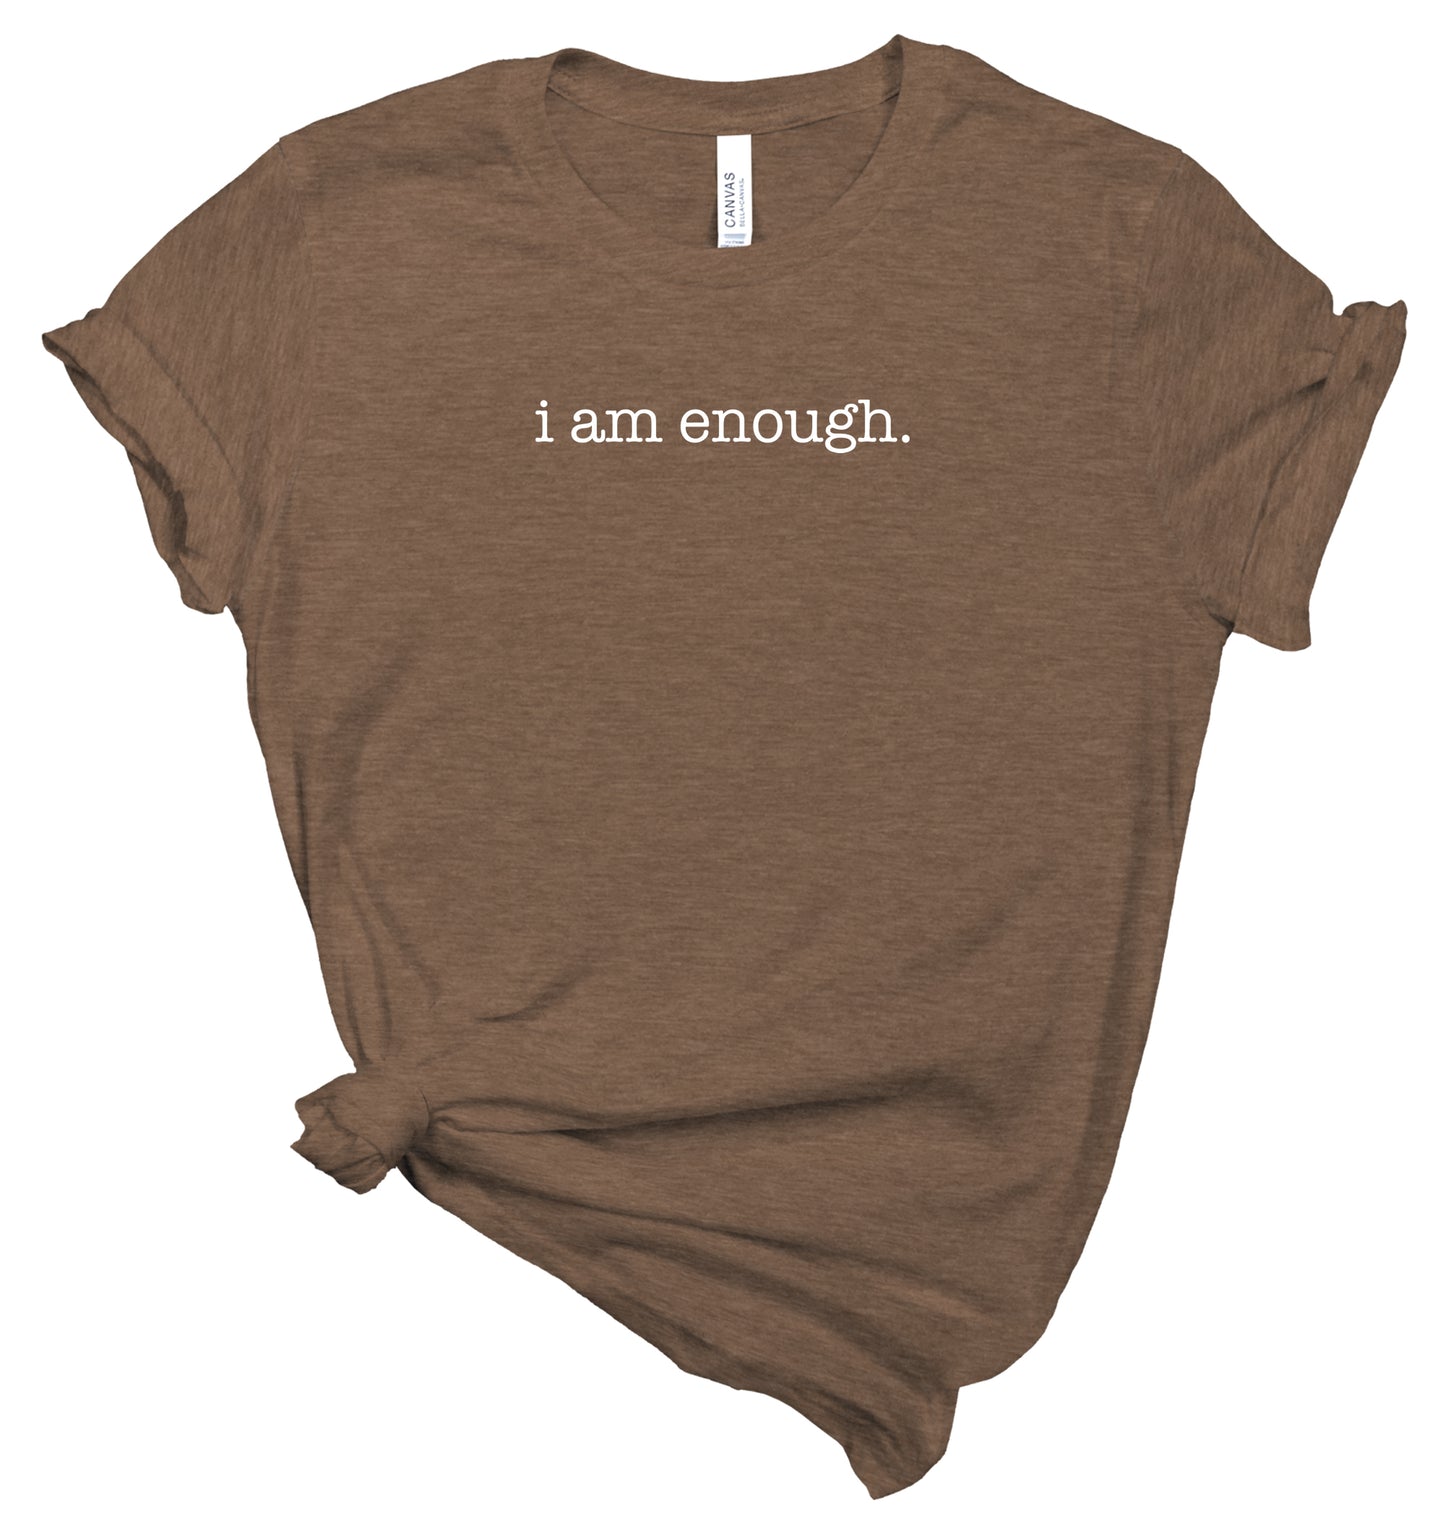 i am enough - Affirmation Shirt - T-Shirt